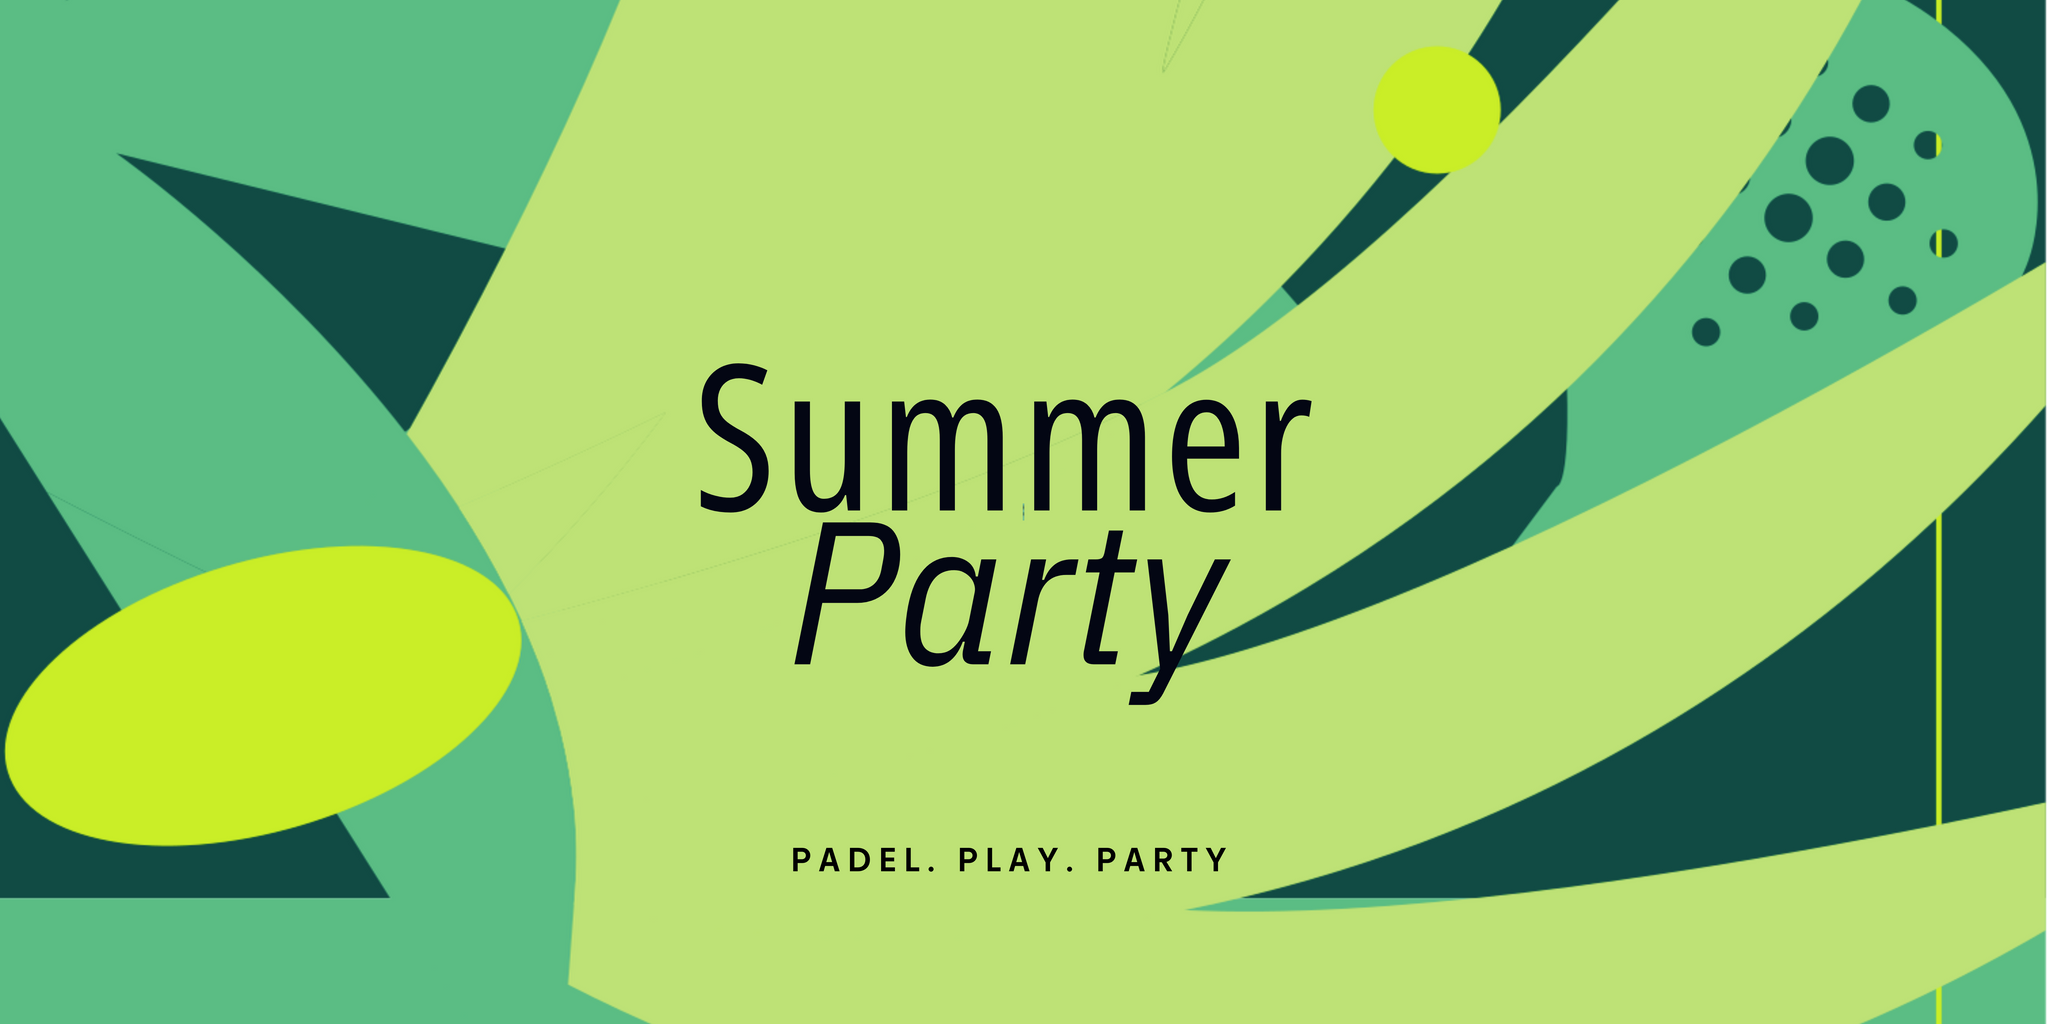 Padel Social Club's Summer Party